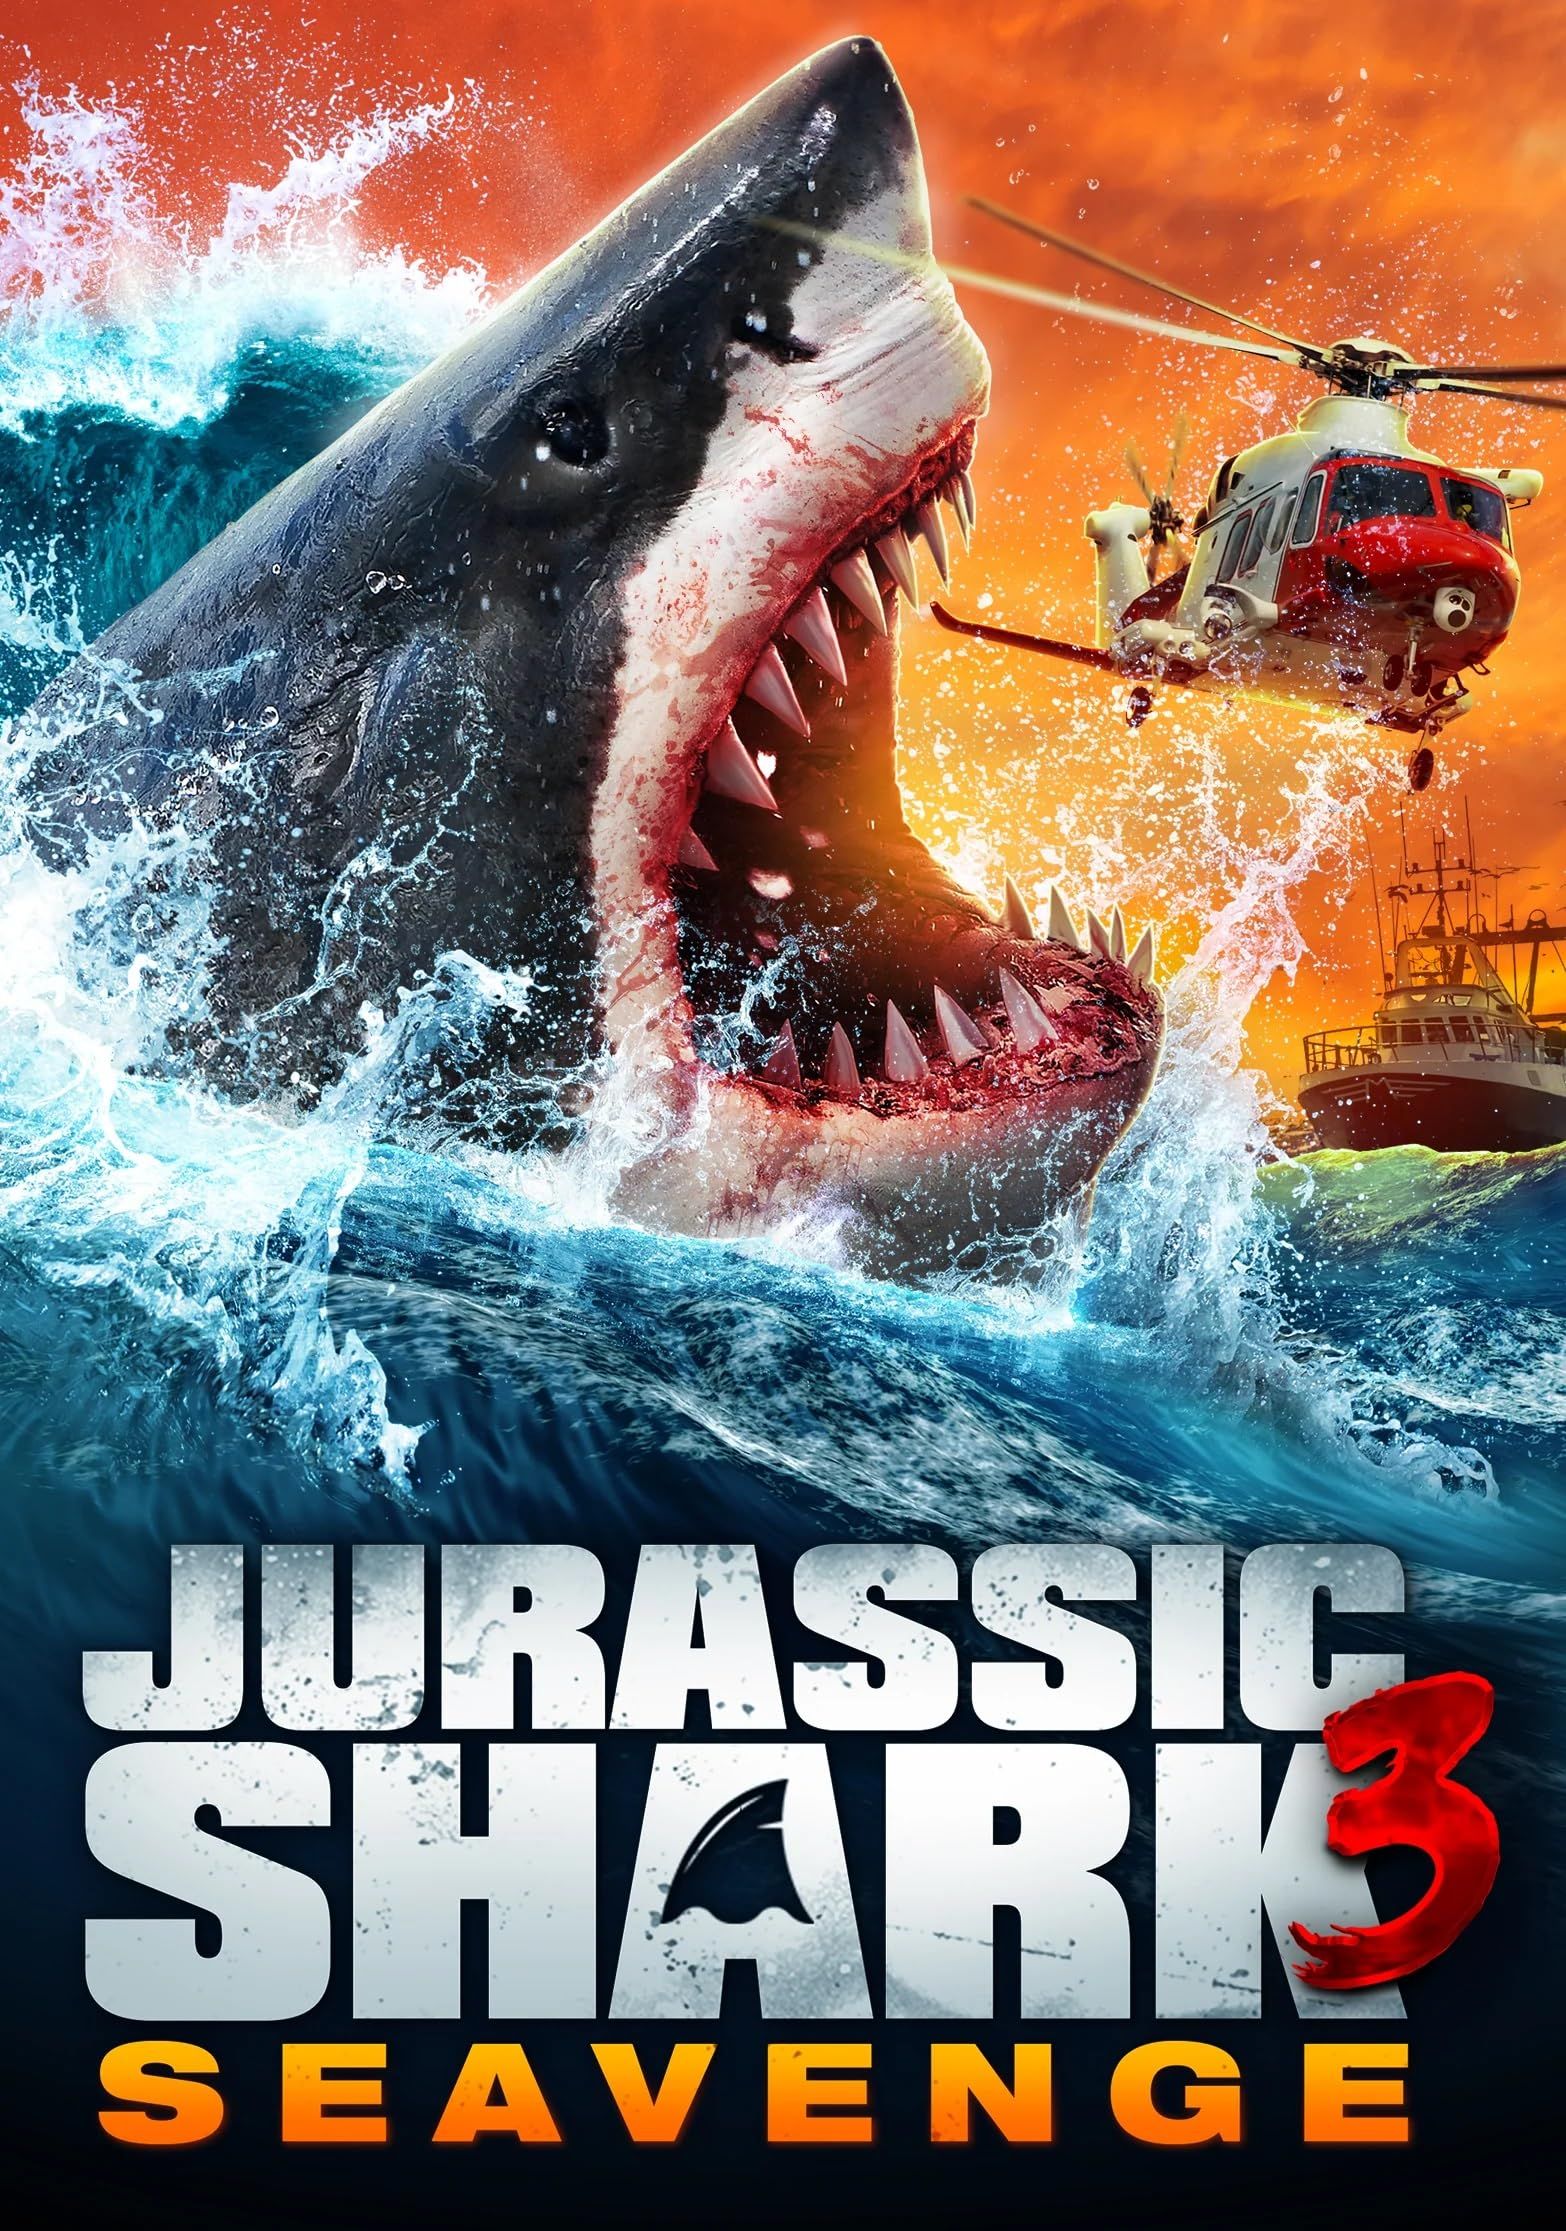 Jurassic Shark 3 Seavenge (2023) Hollywood Movie download full movie